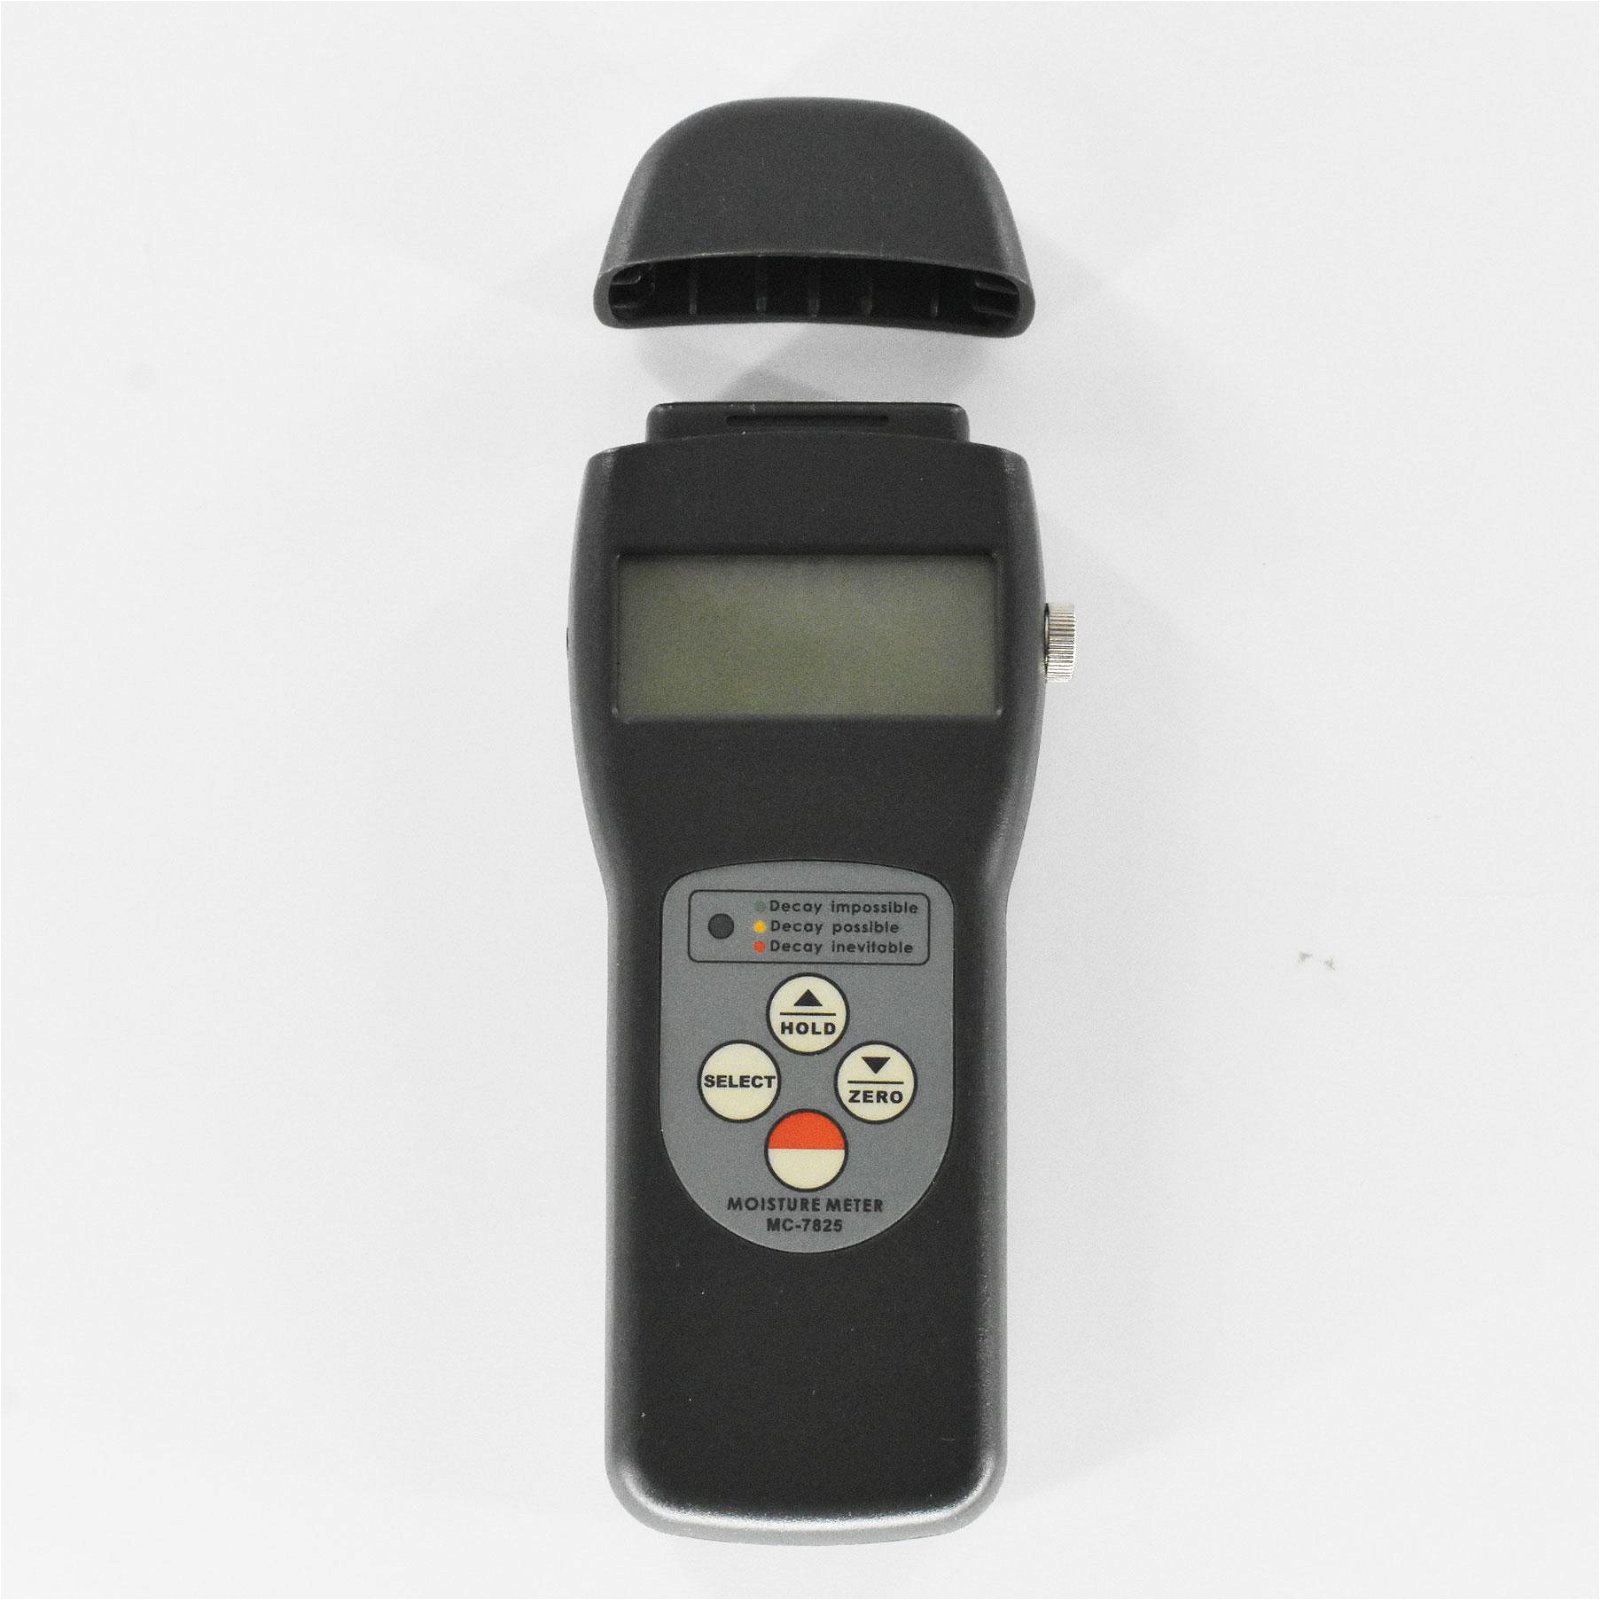 MC-7825COCOA Cocoa Bean Moisture Meter Tester 0-24% Water Measurement Analyzer